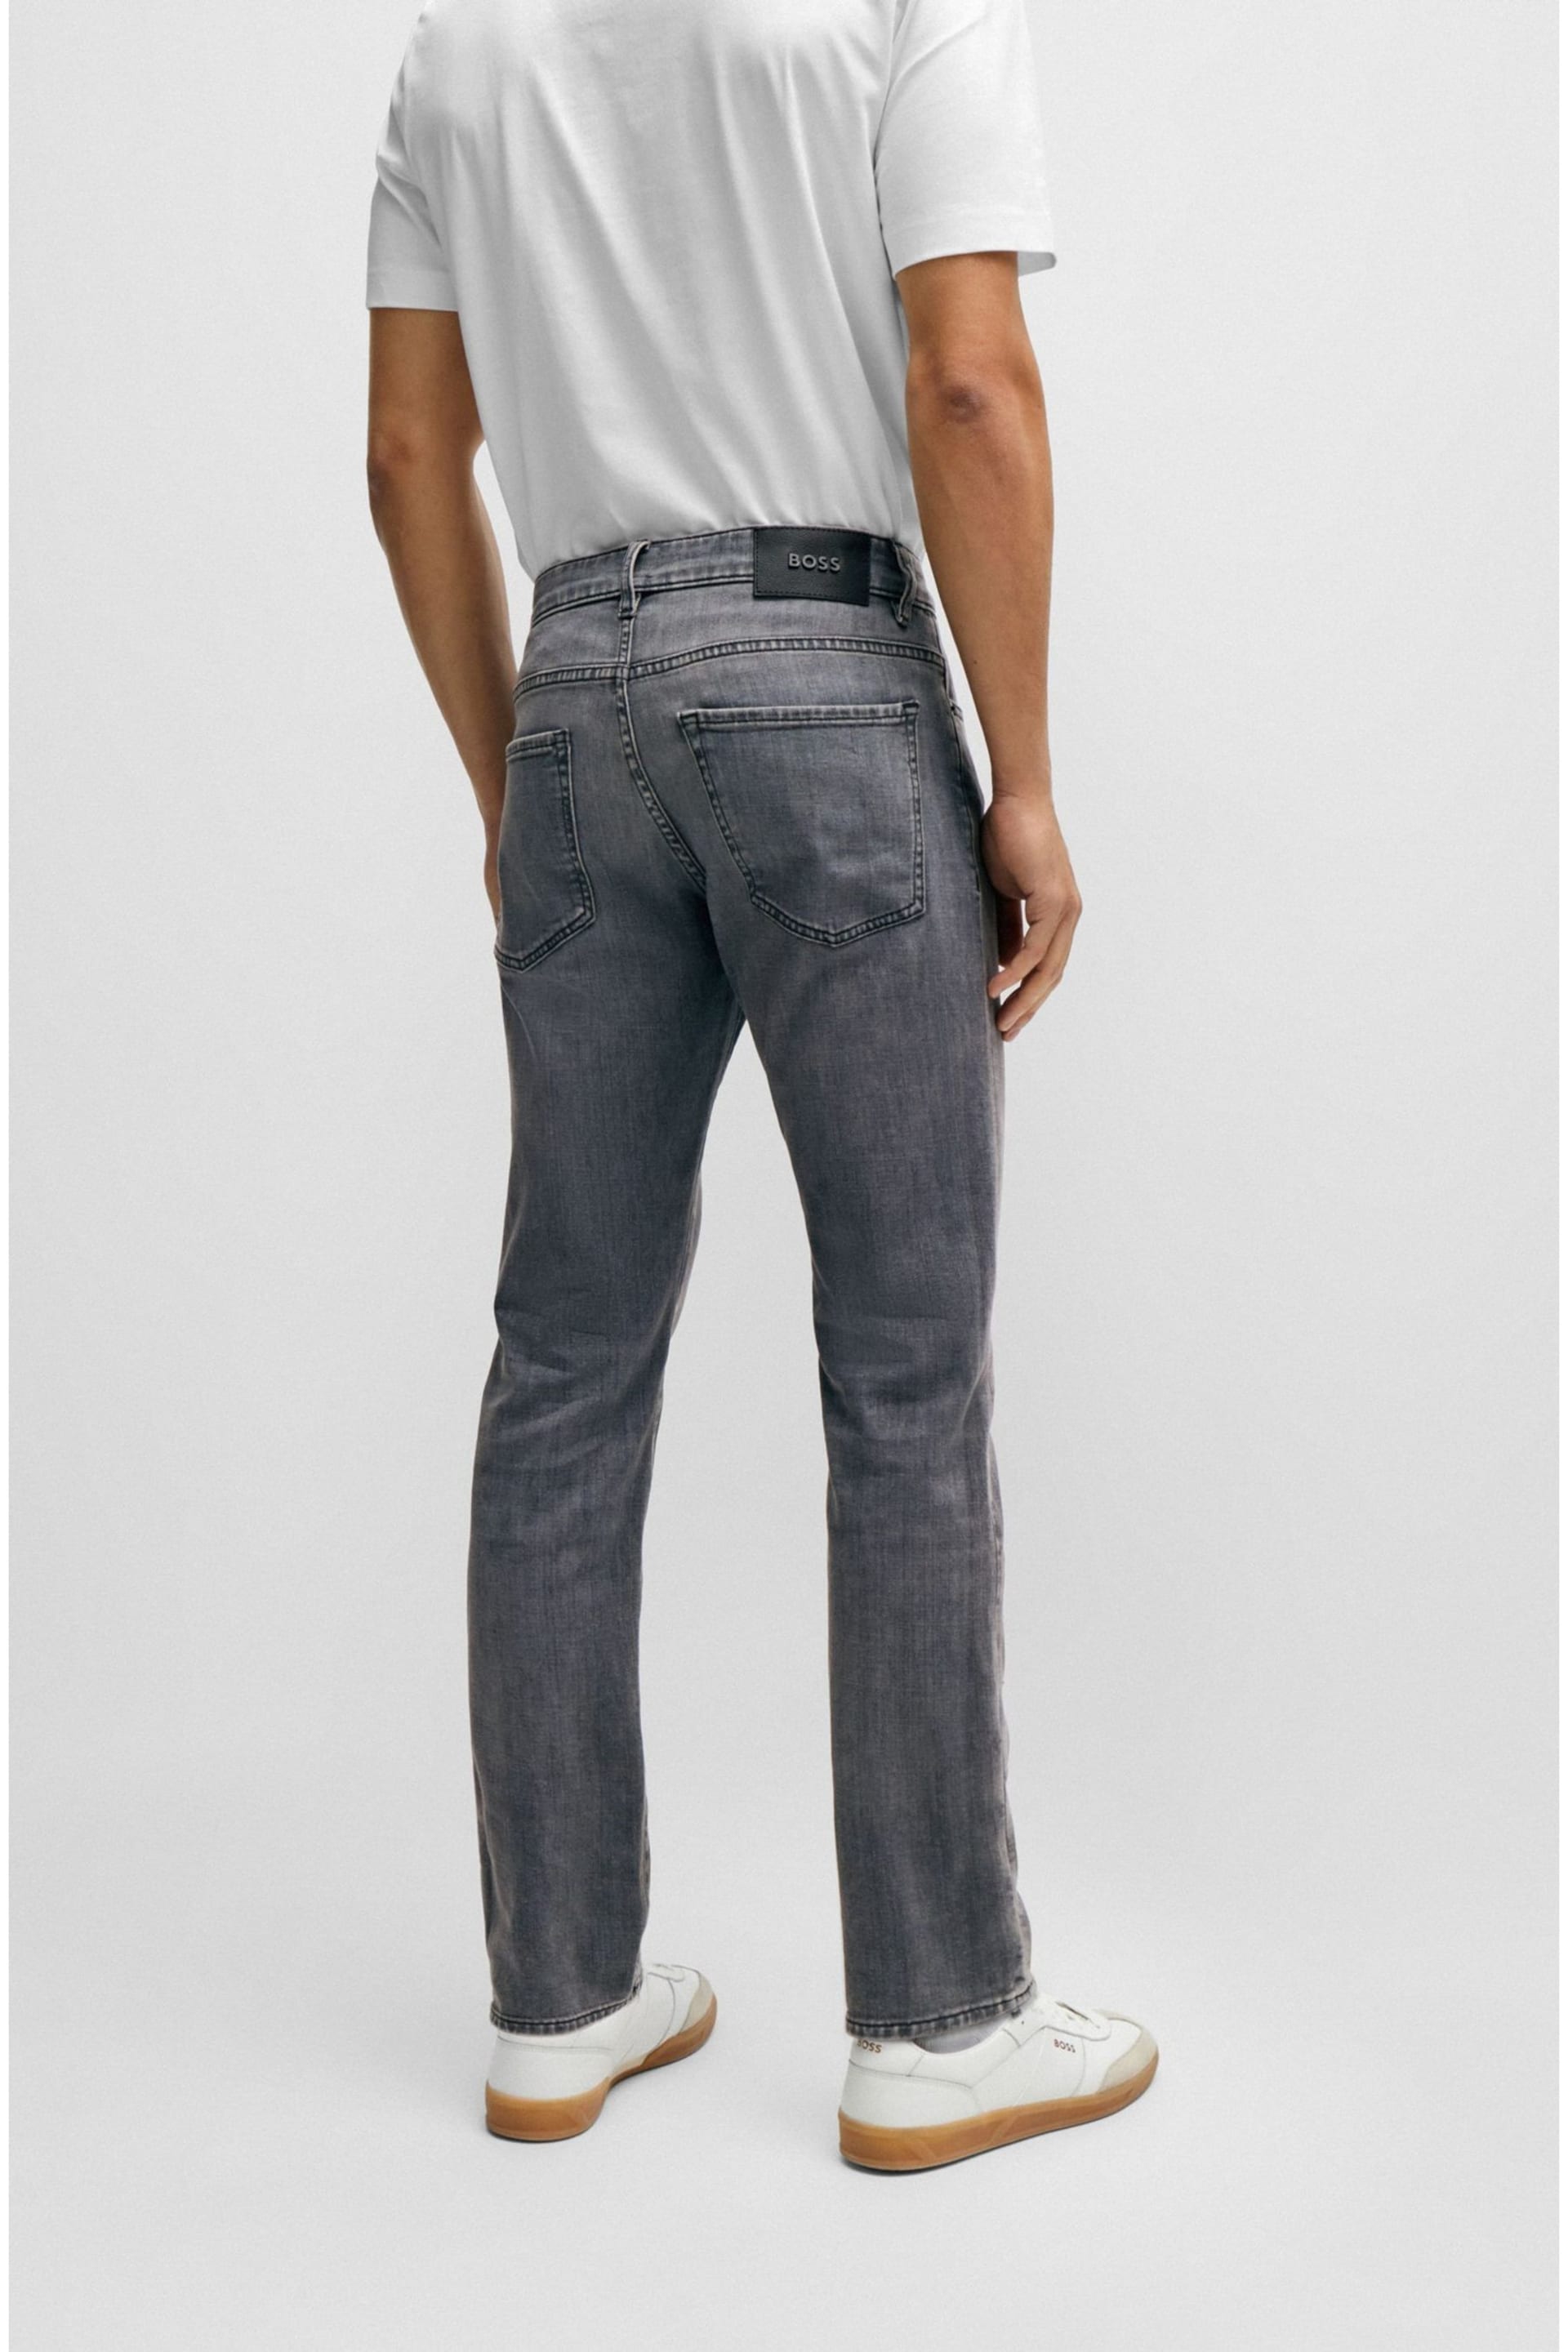 BOSS Grey Delaware Slim Fit Jeans - Image 2 of 5